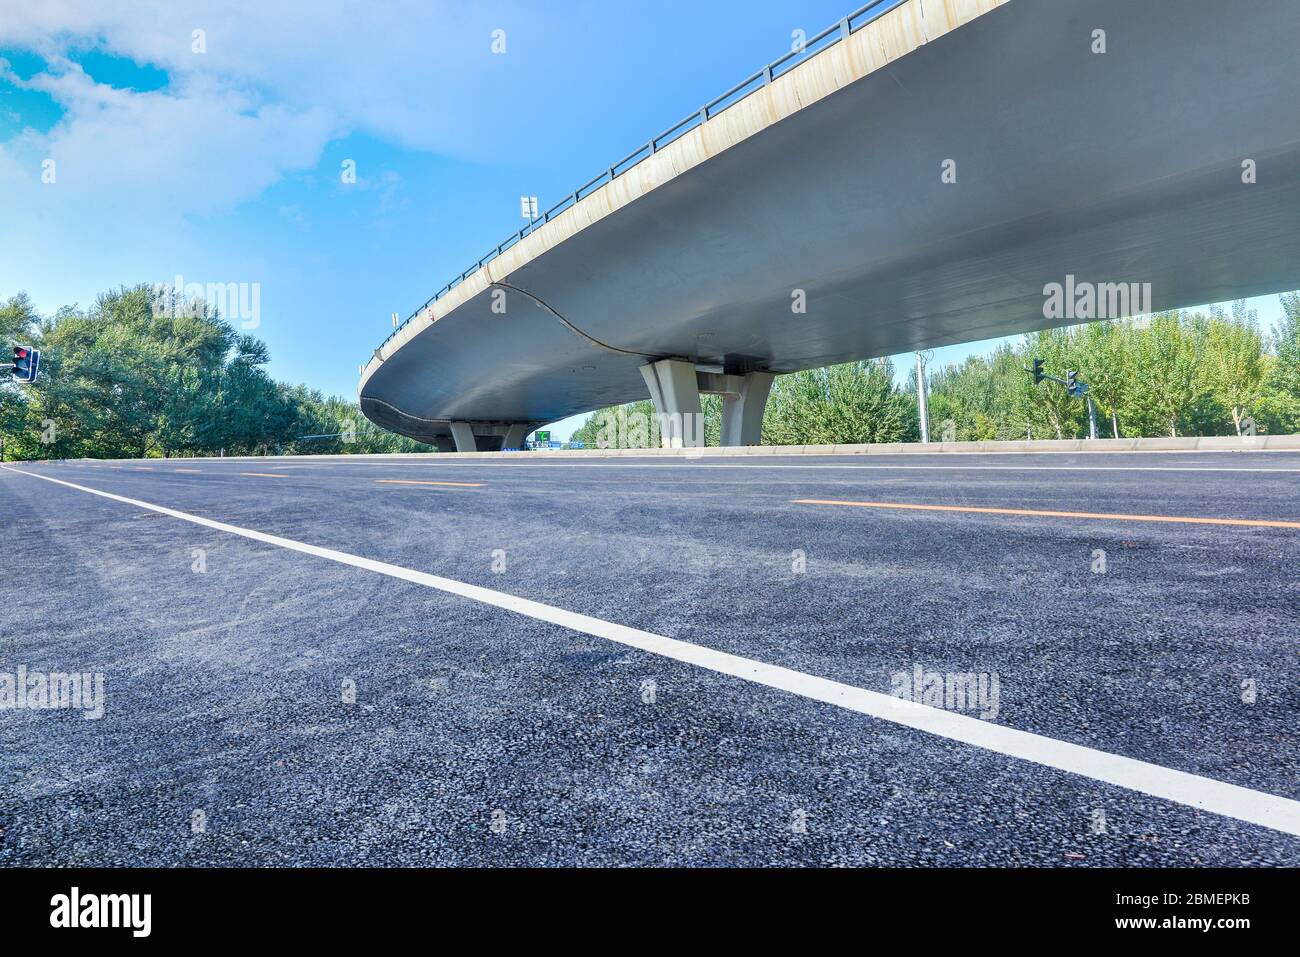 Under the overpass, car-free asphalt road, modern city building skyline as background. Stock Photo